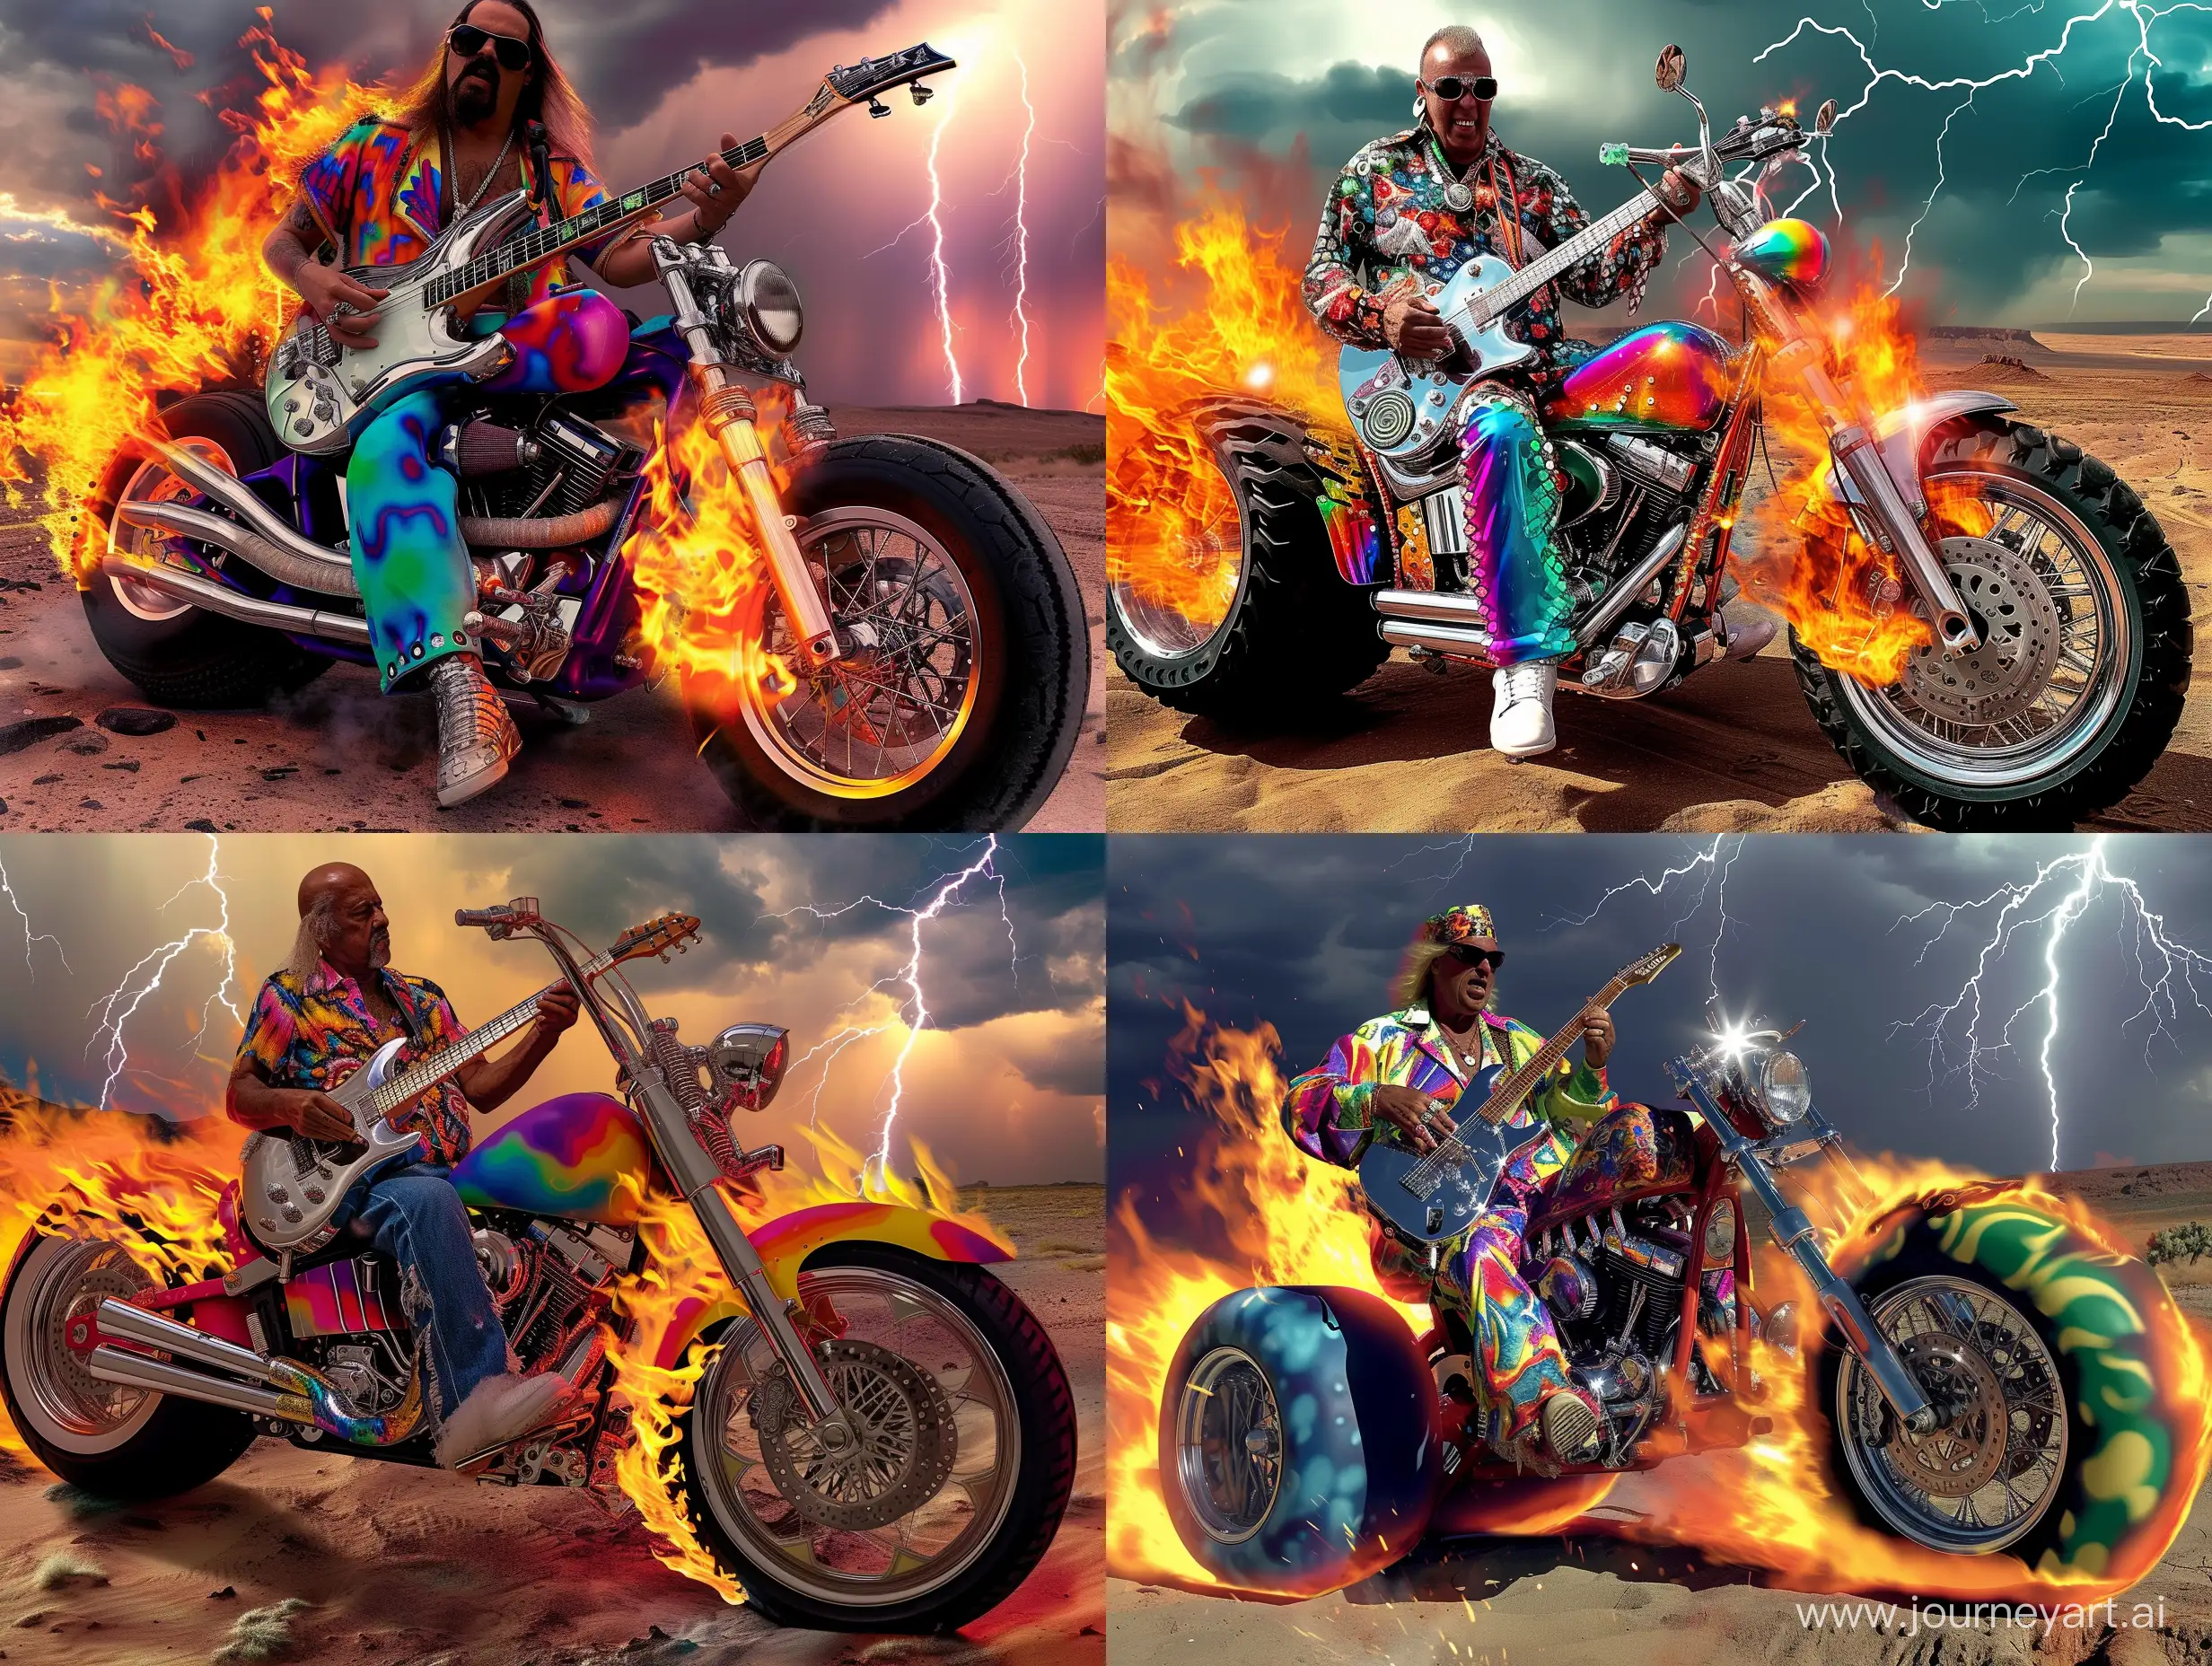 Chrome-Guitarist-on-Fiery-Motorcycle-under-Desert-Sky